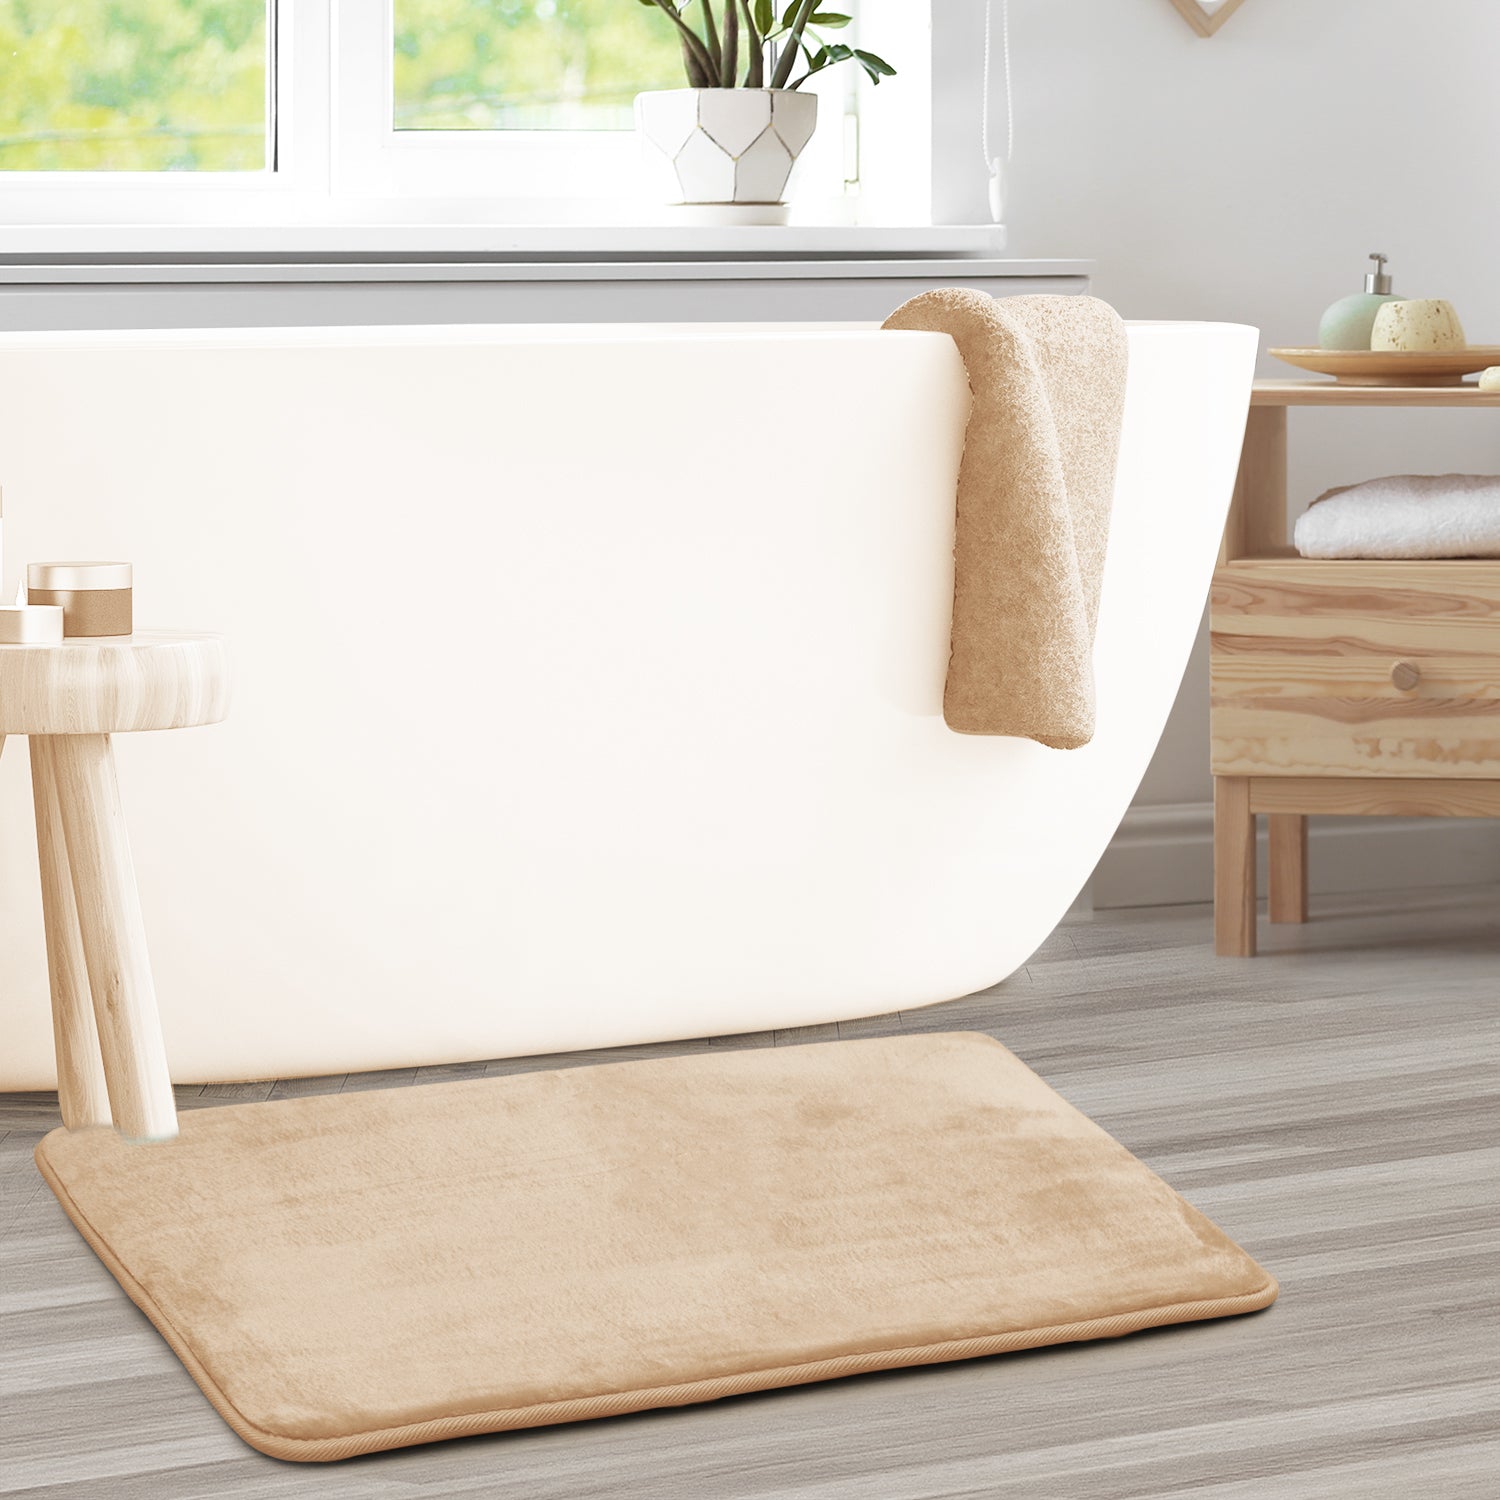 1p Memory Foam Bath Bathmat, Anti-skid Durable Floor Rug, Cozy